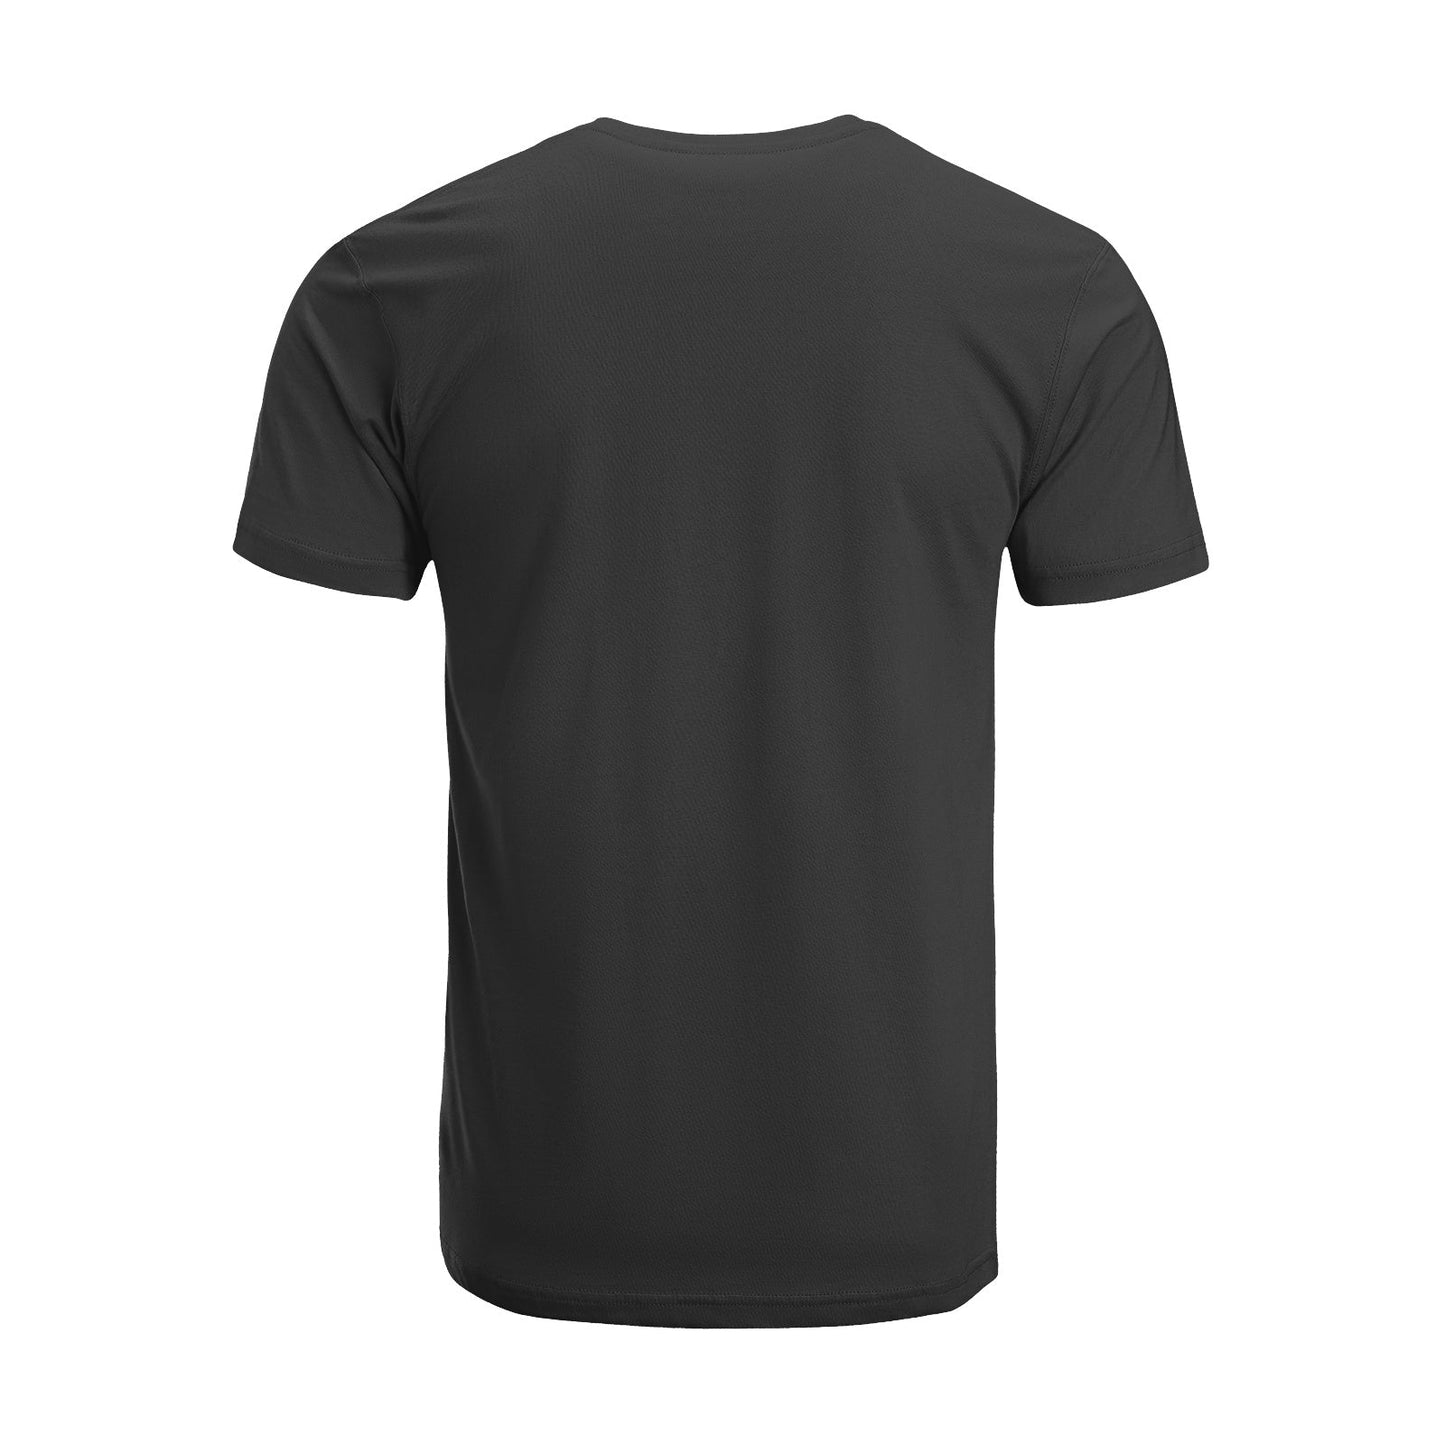 Unisex Short Sleeve Crew Neck Cotton Jersey T-Shirt CAT 33 - Tara-Outfits.com